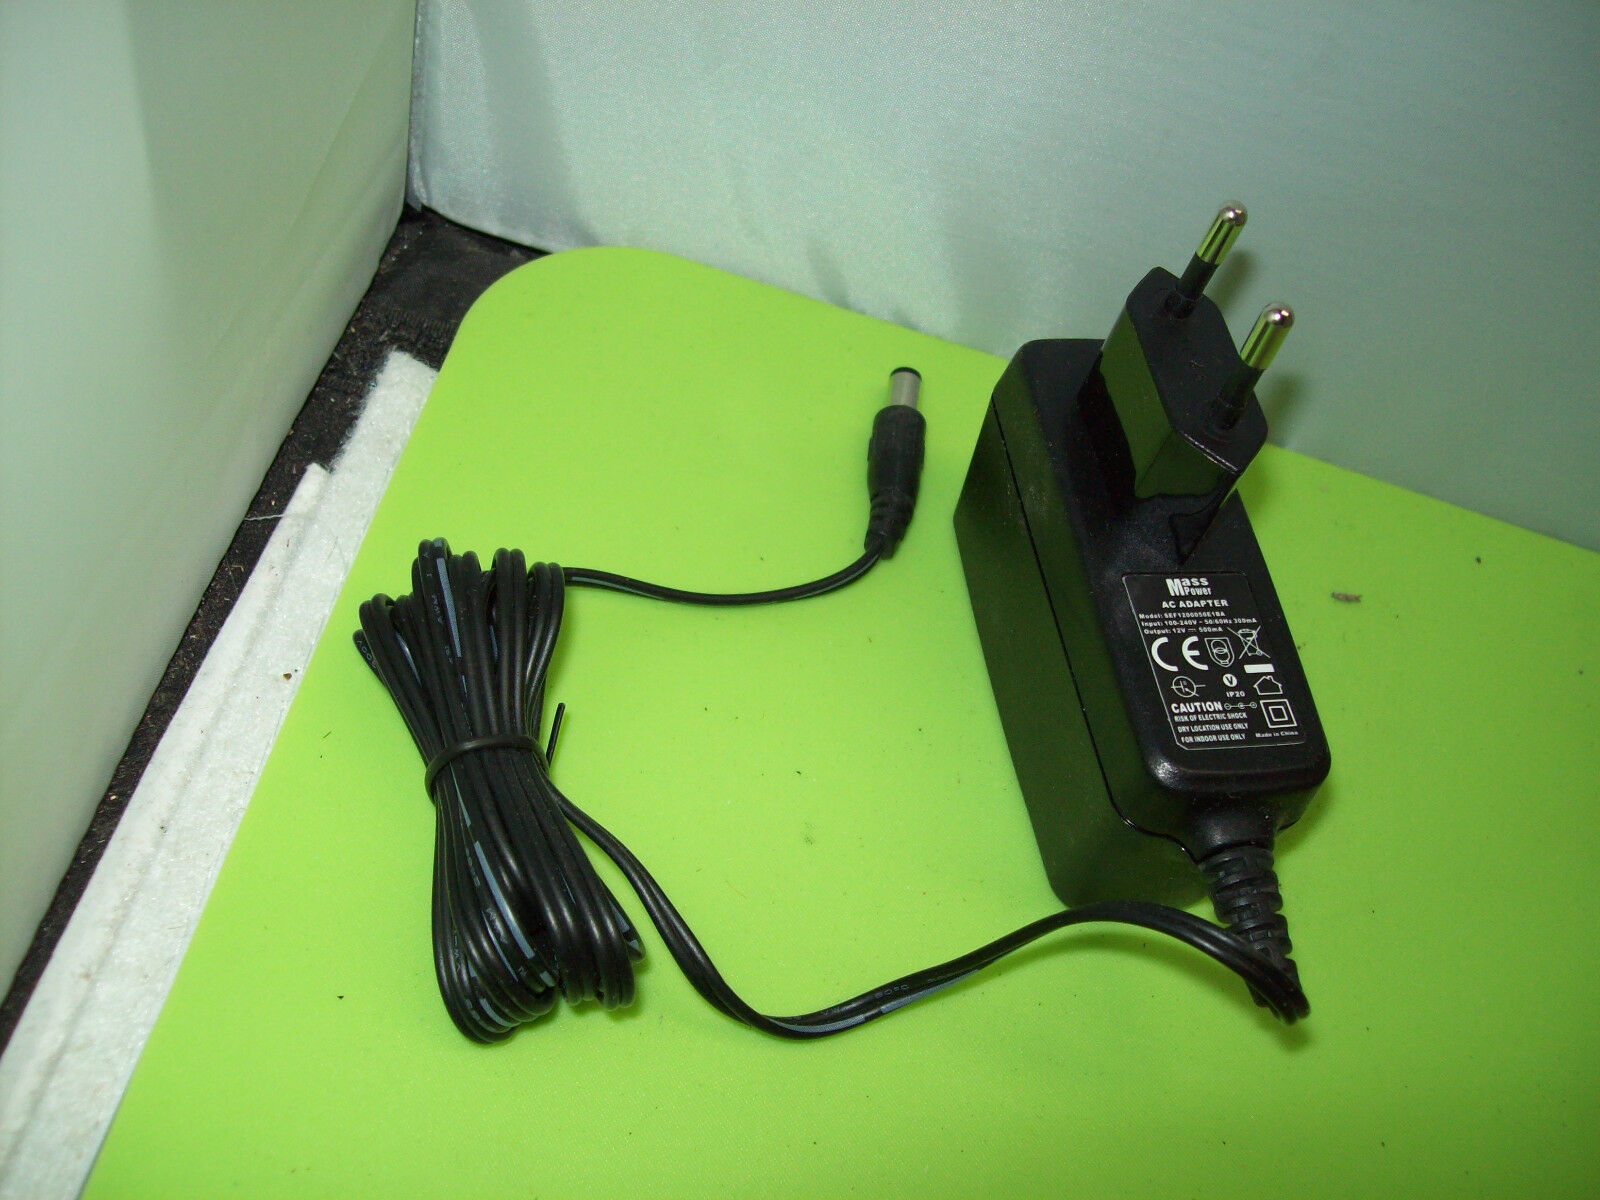 Original Power Supply AC Adapter Mass Power sef1200050e1ba 12v Marke: mass Herstellernummer: SEF1200050E1BA Produkt - Click Image to Close